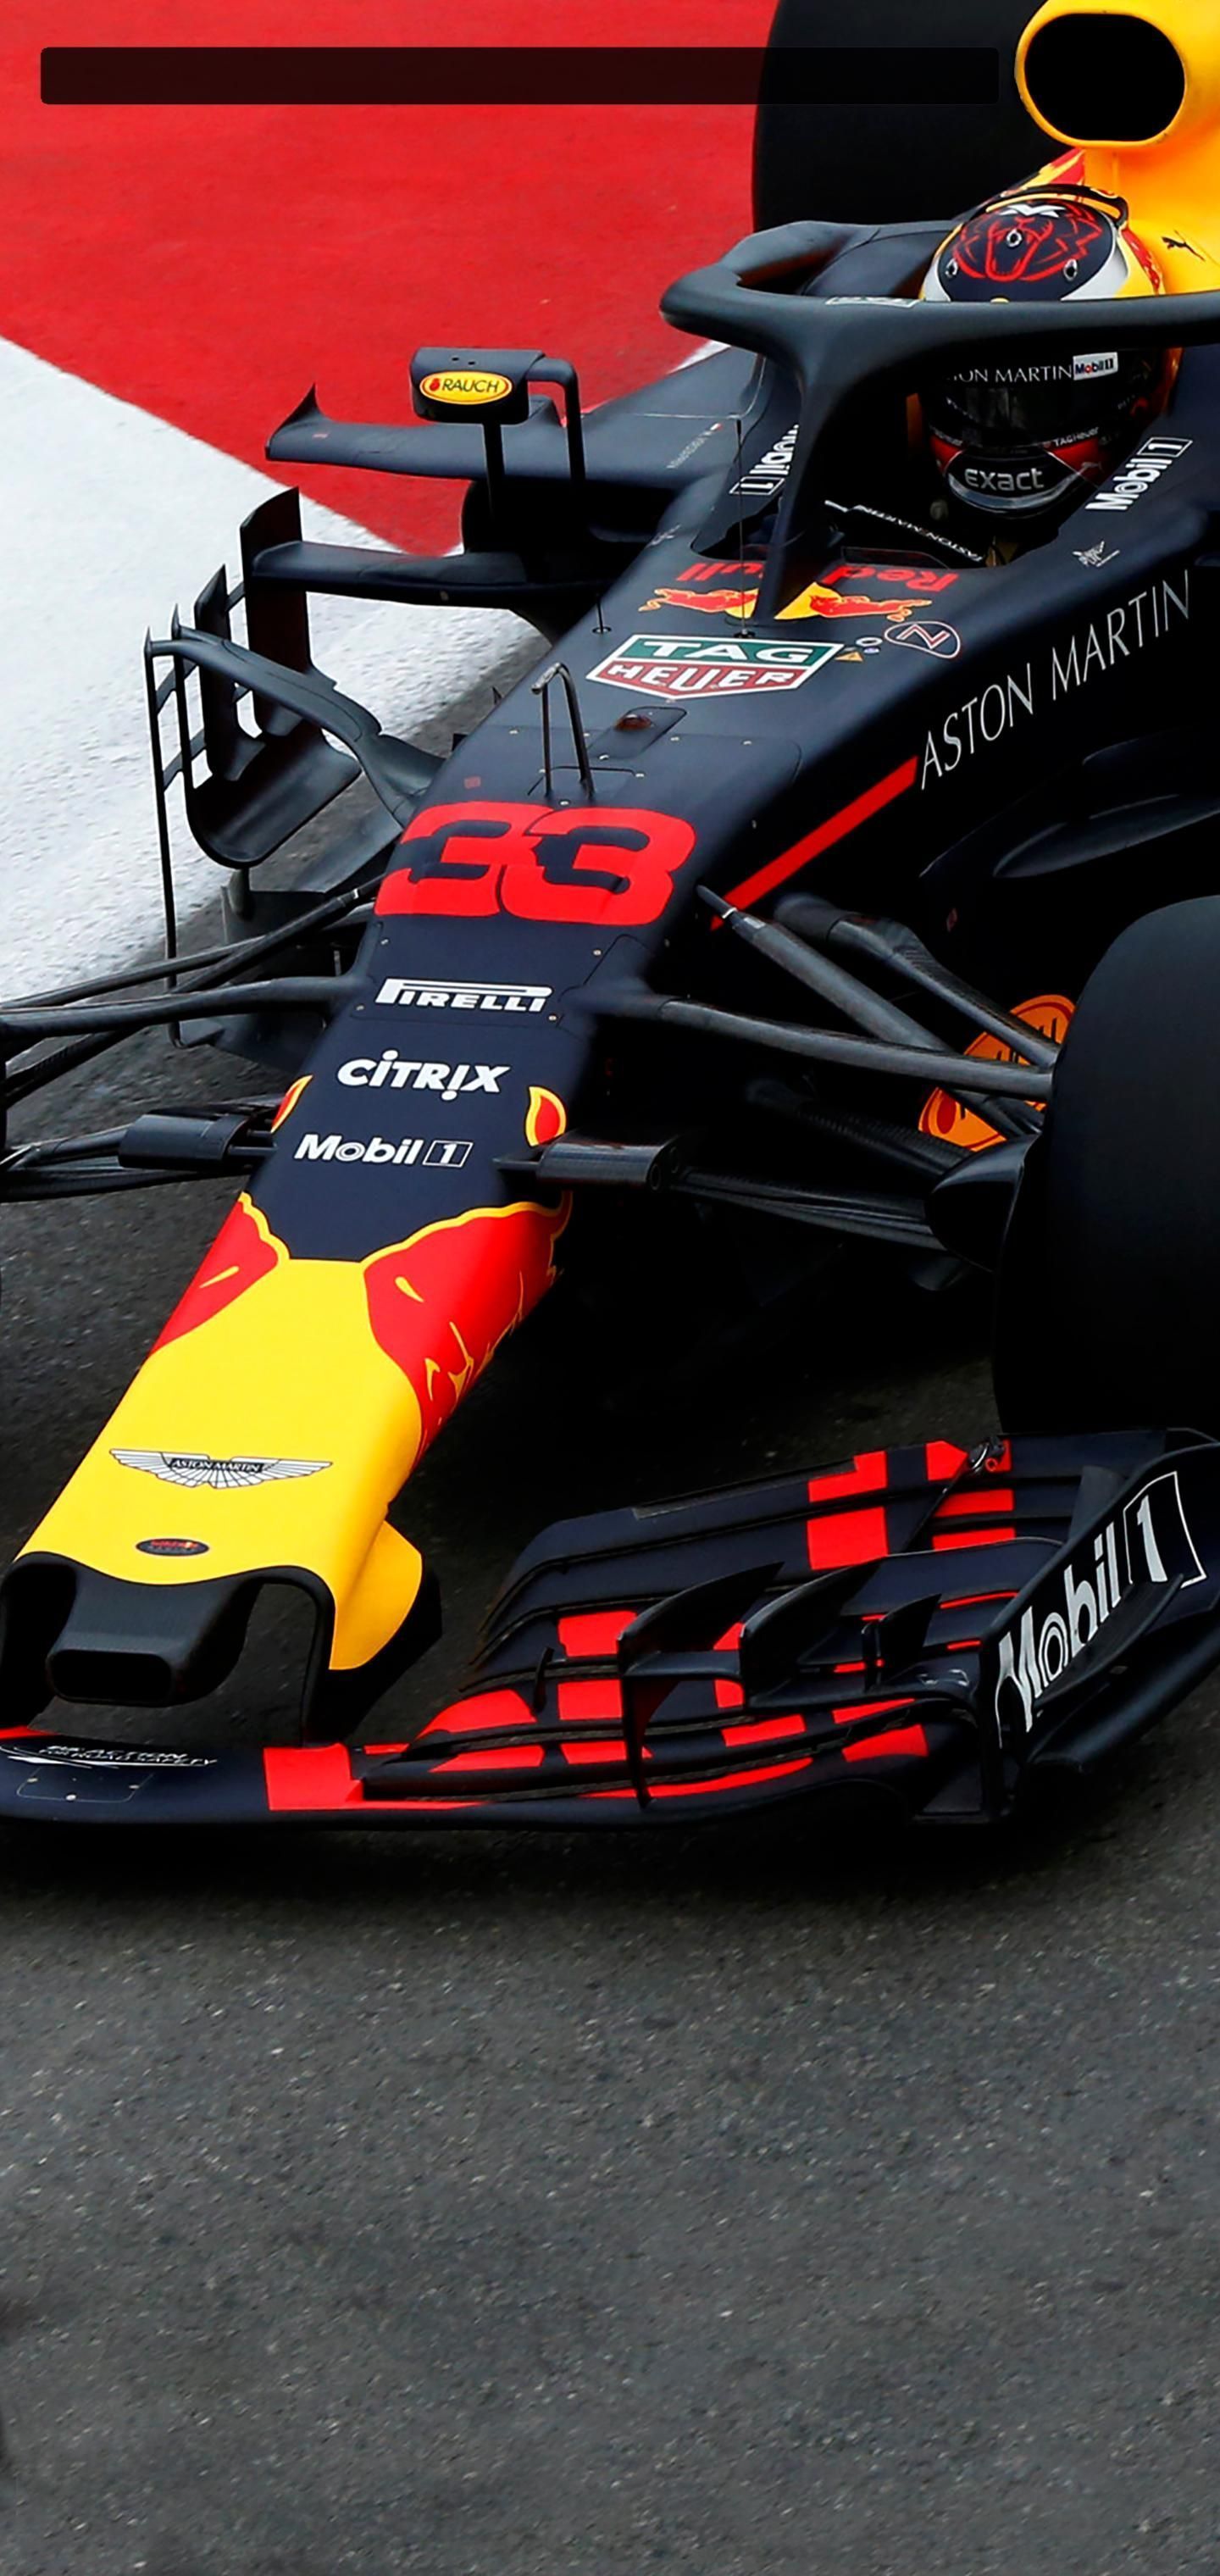 Red Bull F1 Racing By Mbeats85 Galaxy S10 Hole Punch Wallpaper. Red Bull Racing, Racing, F1 Racing